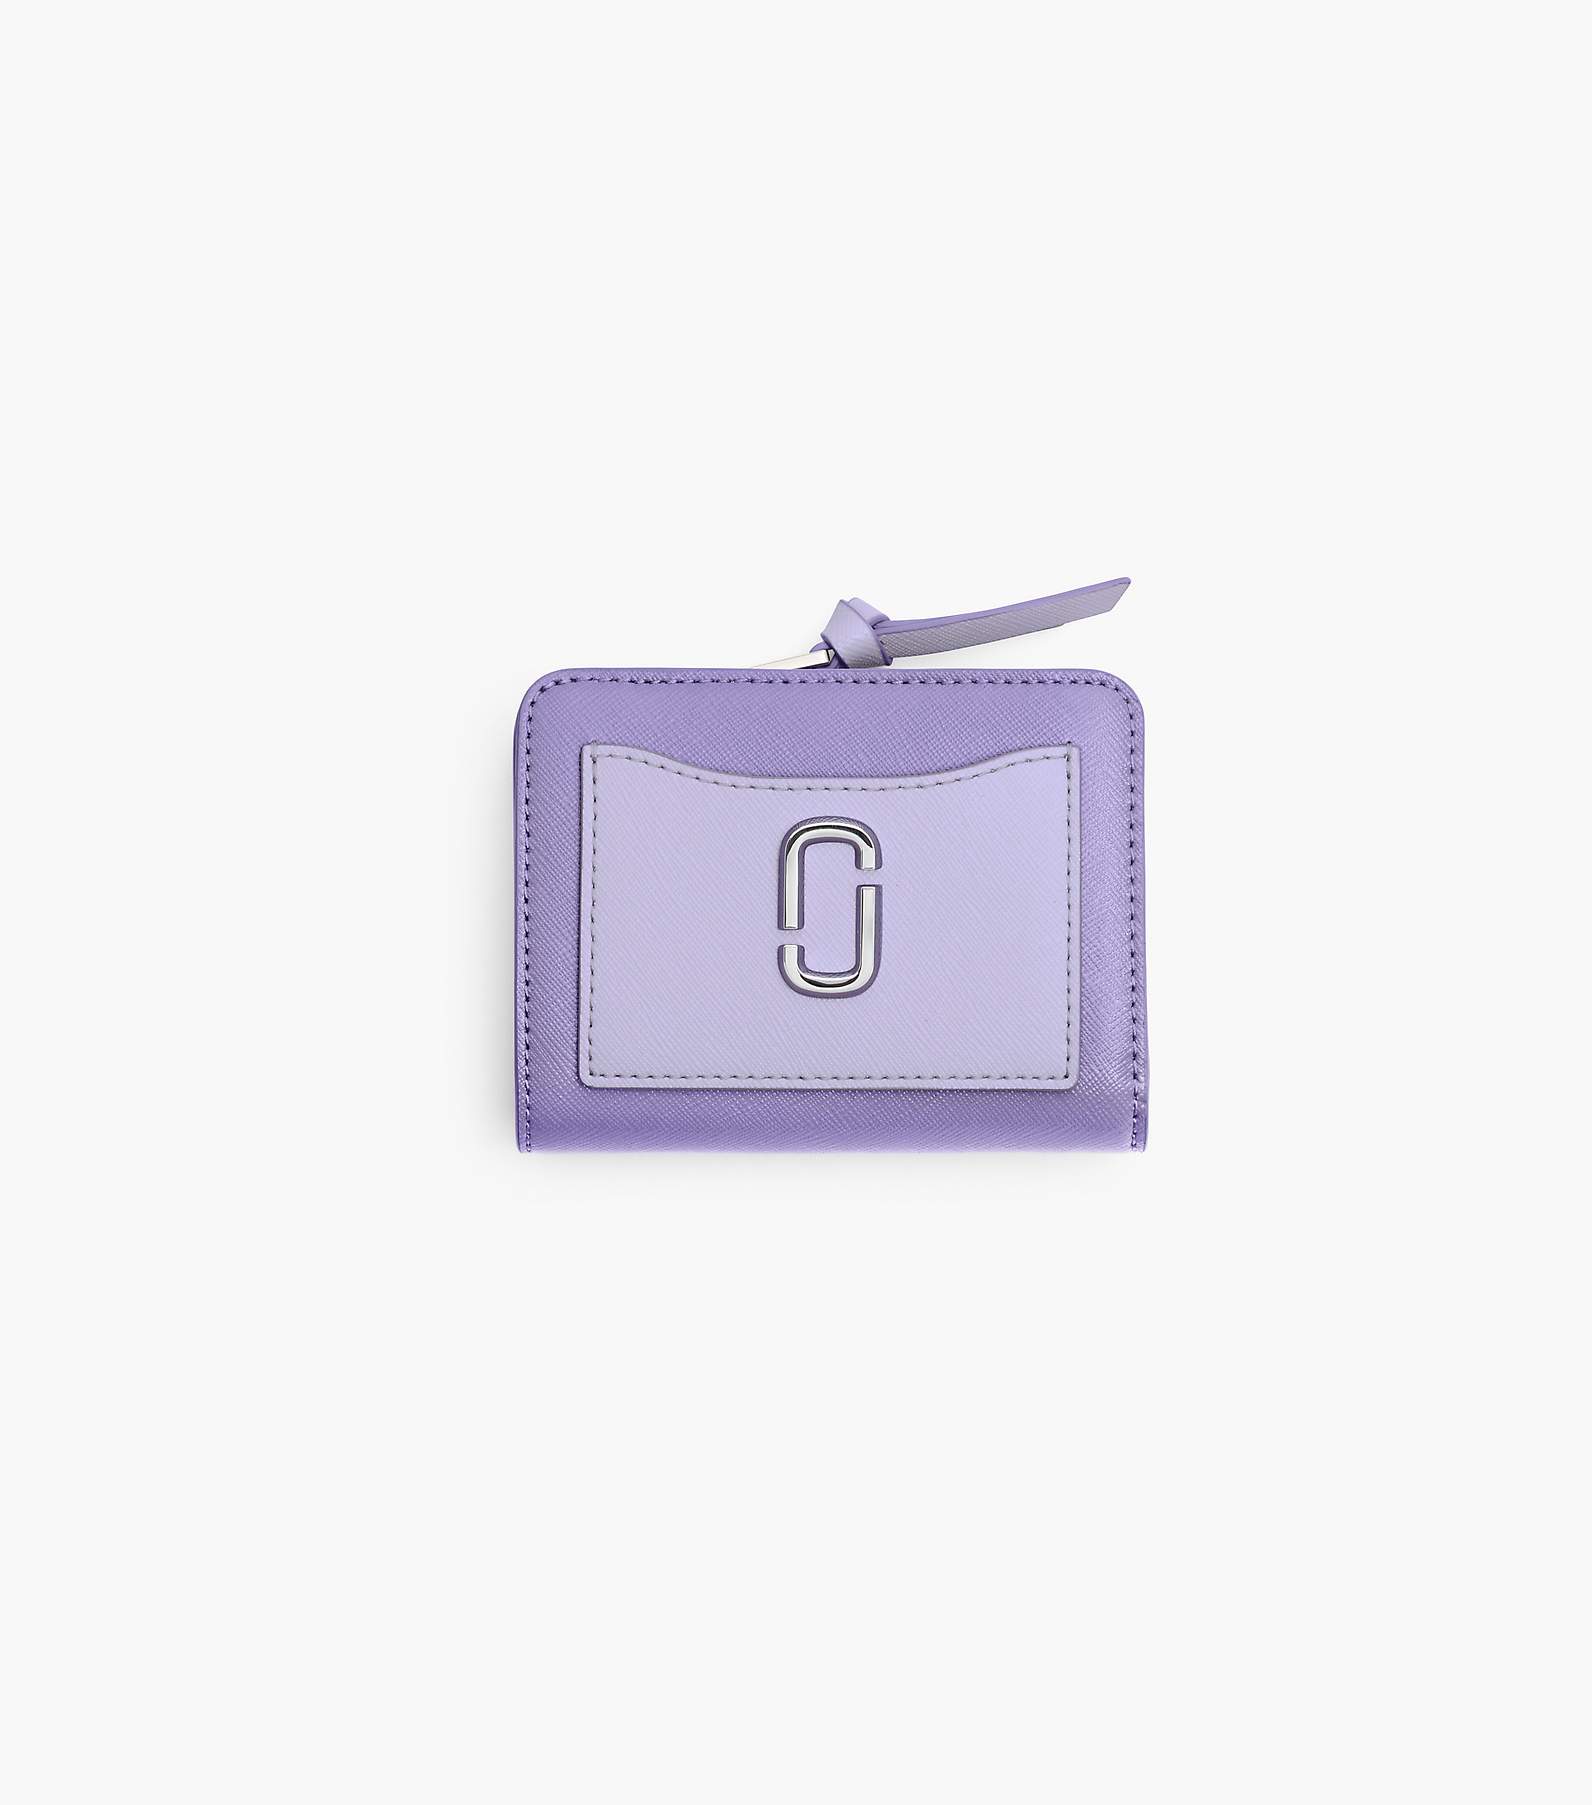  Marc Jacobs Snapshot Mini Compact Wallet Magenta Multi